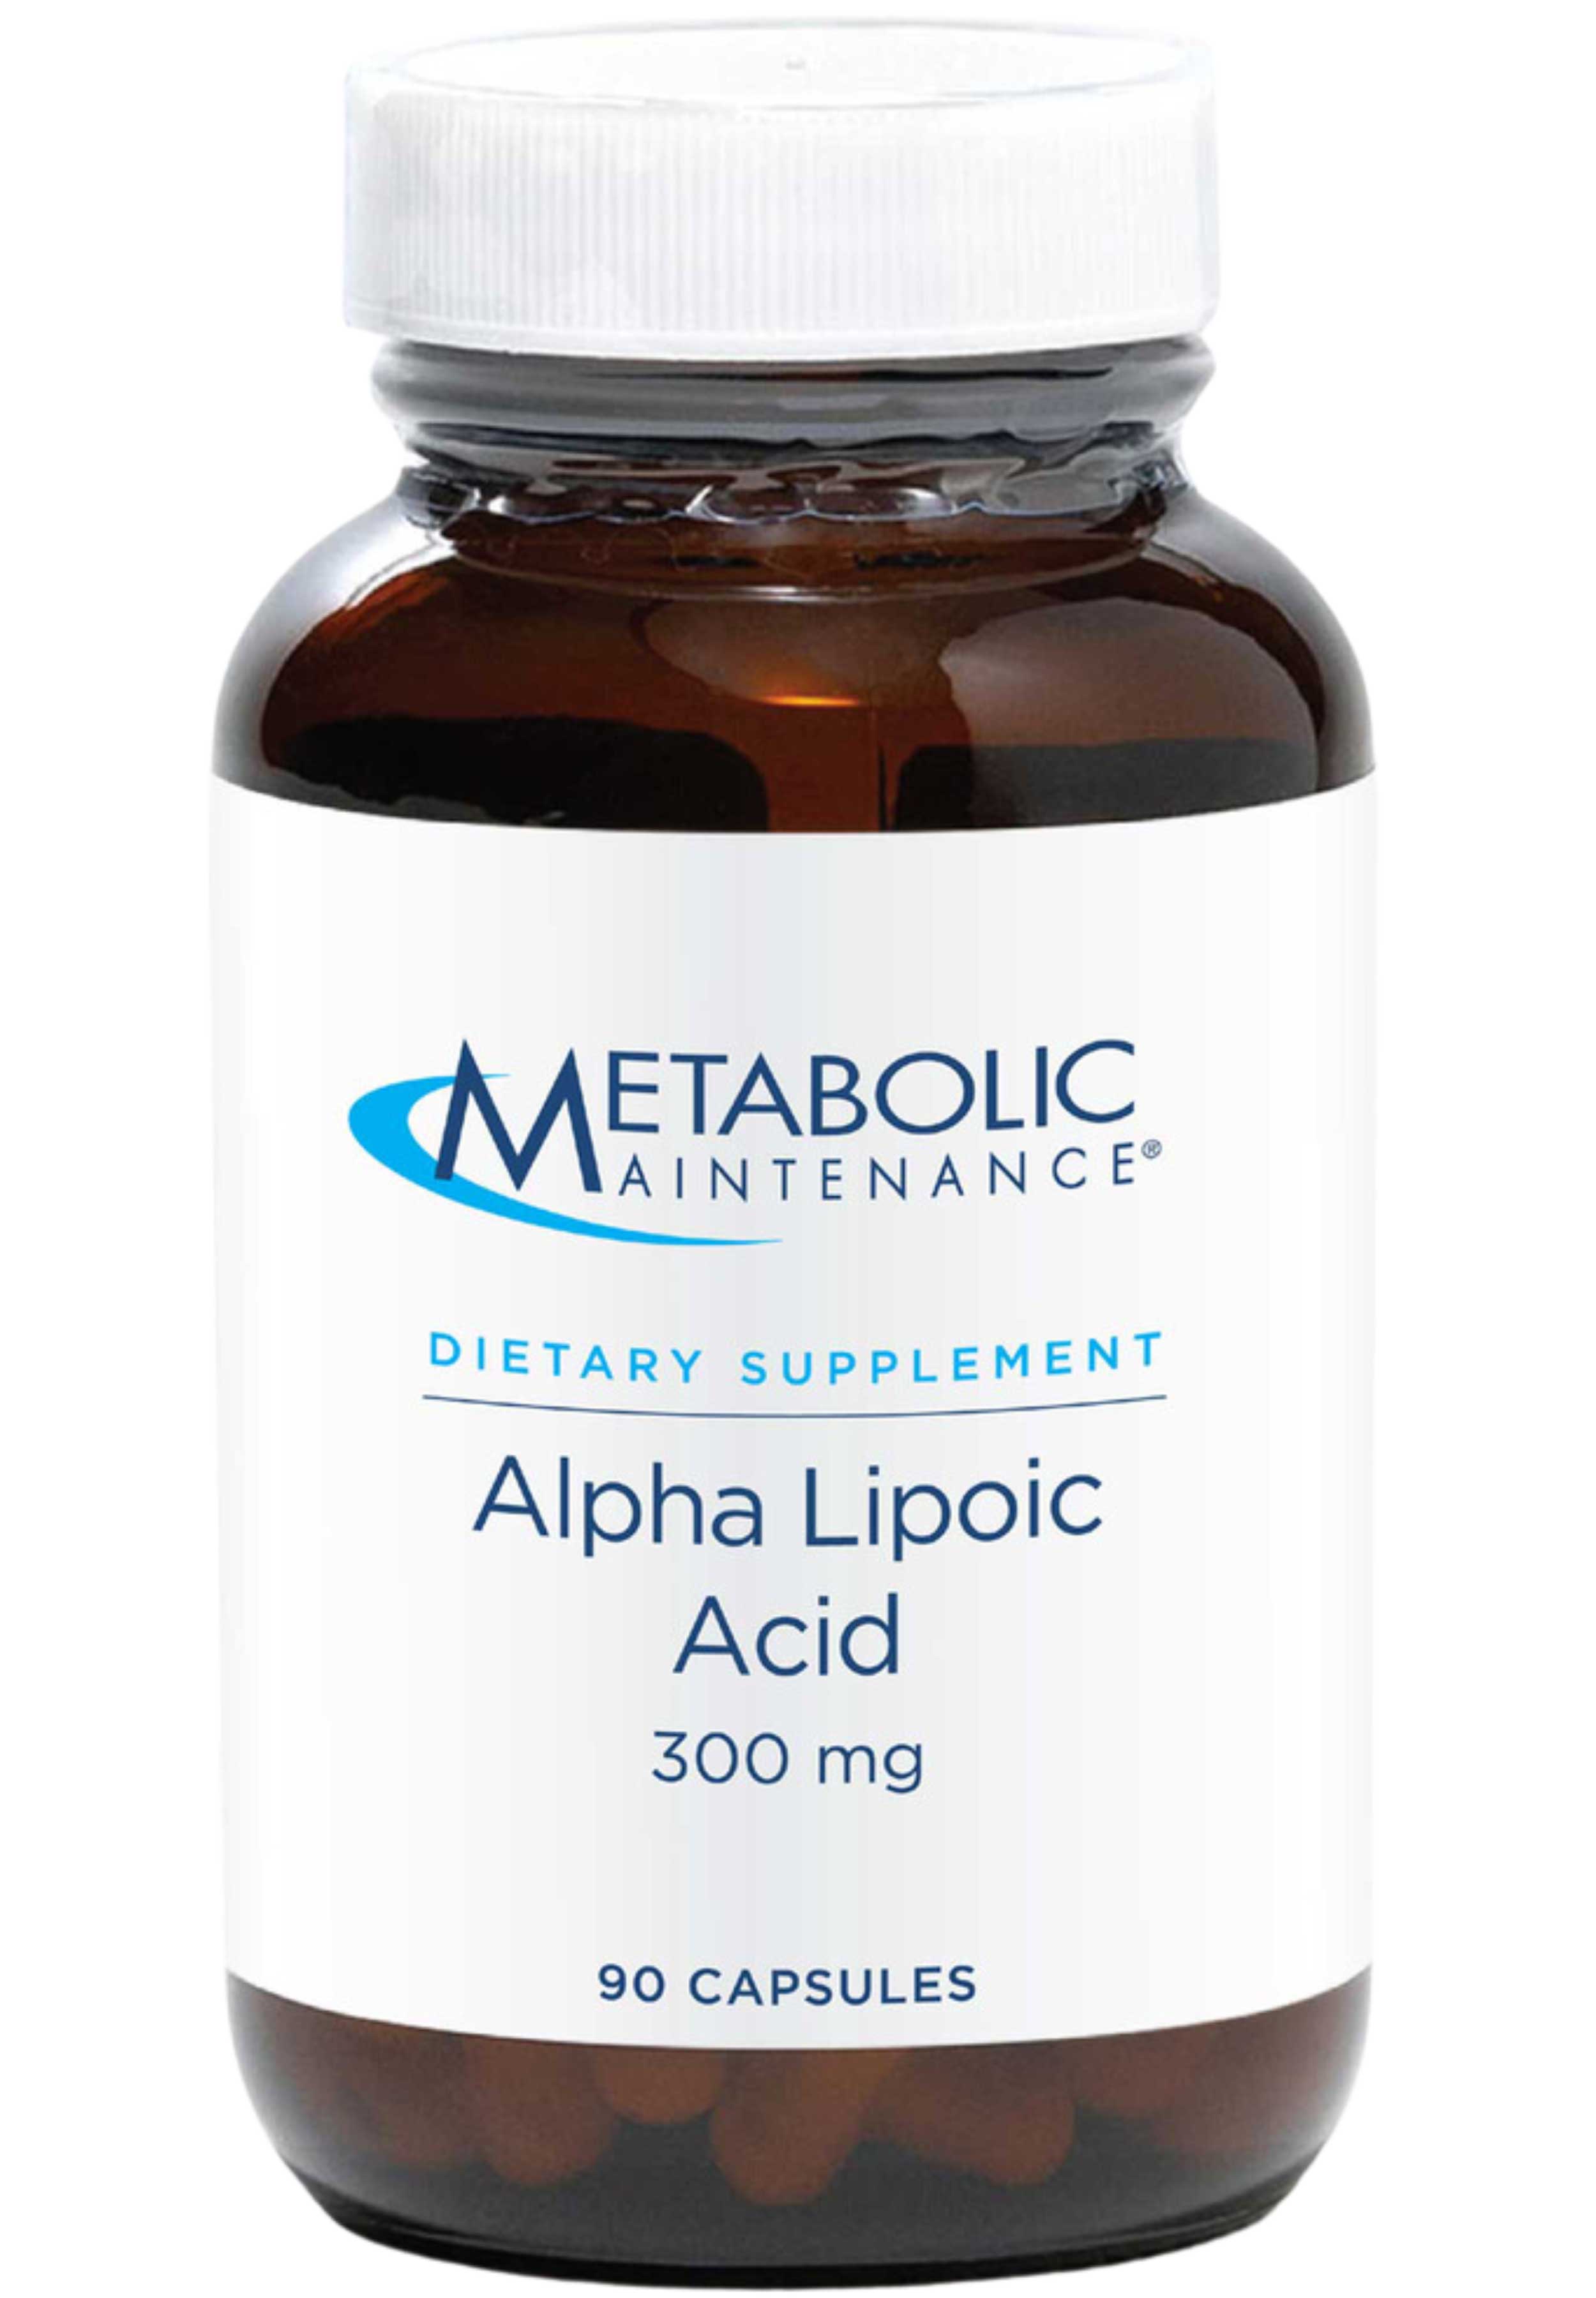 Metabolic Maintenance Alpha Lipoic Acid